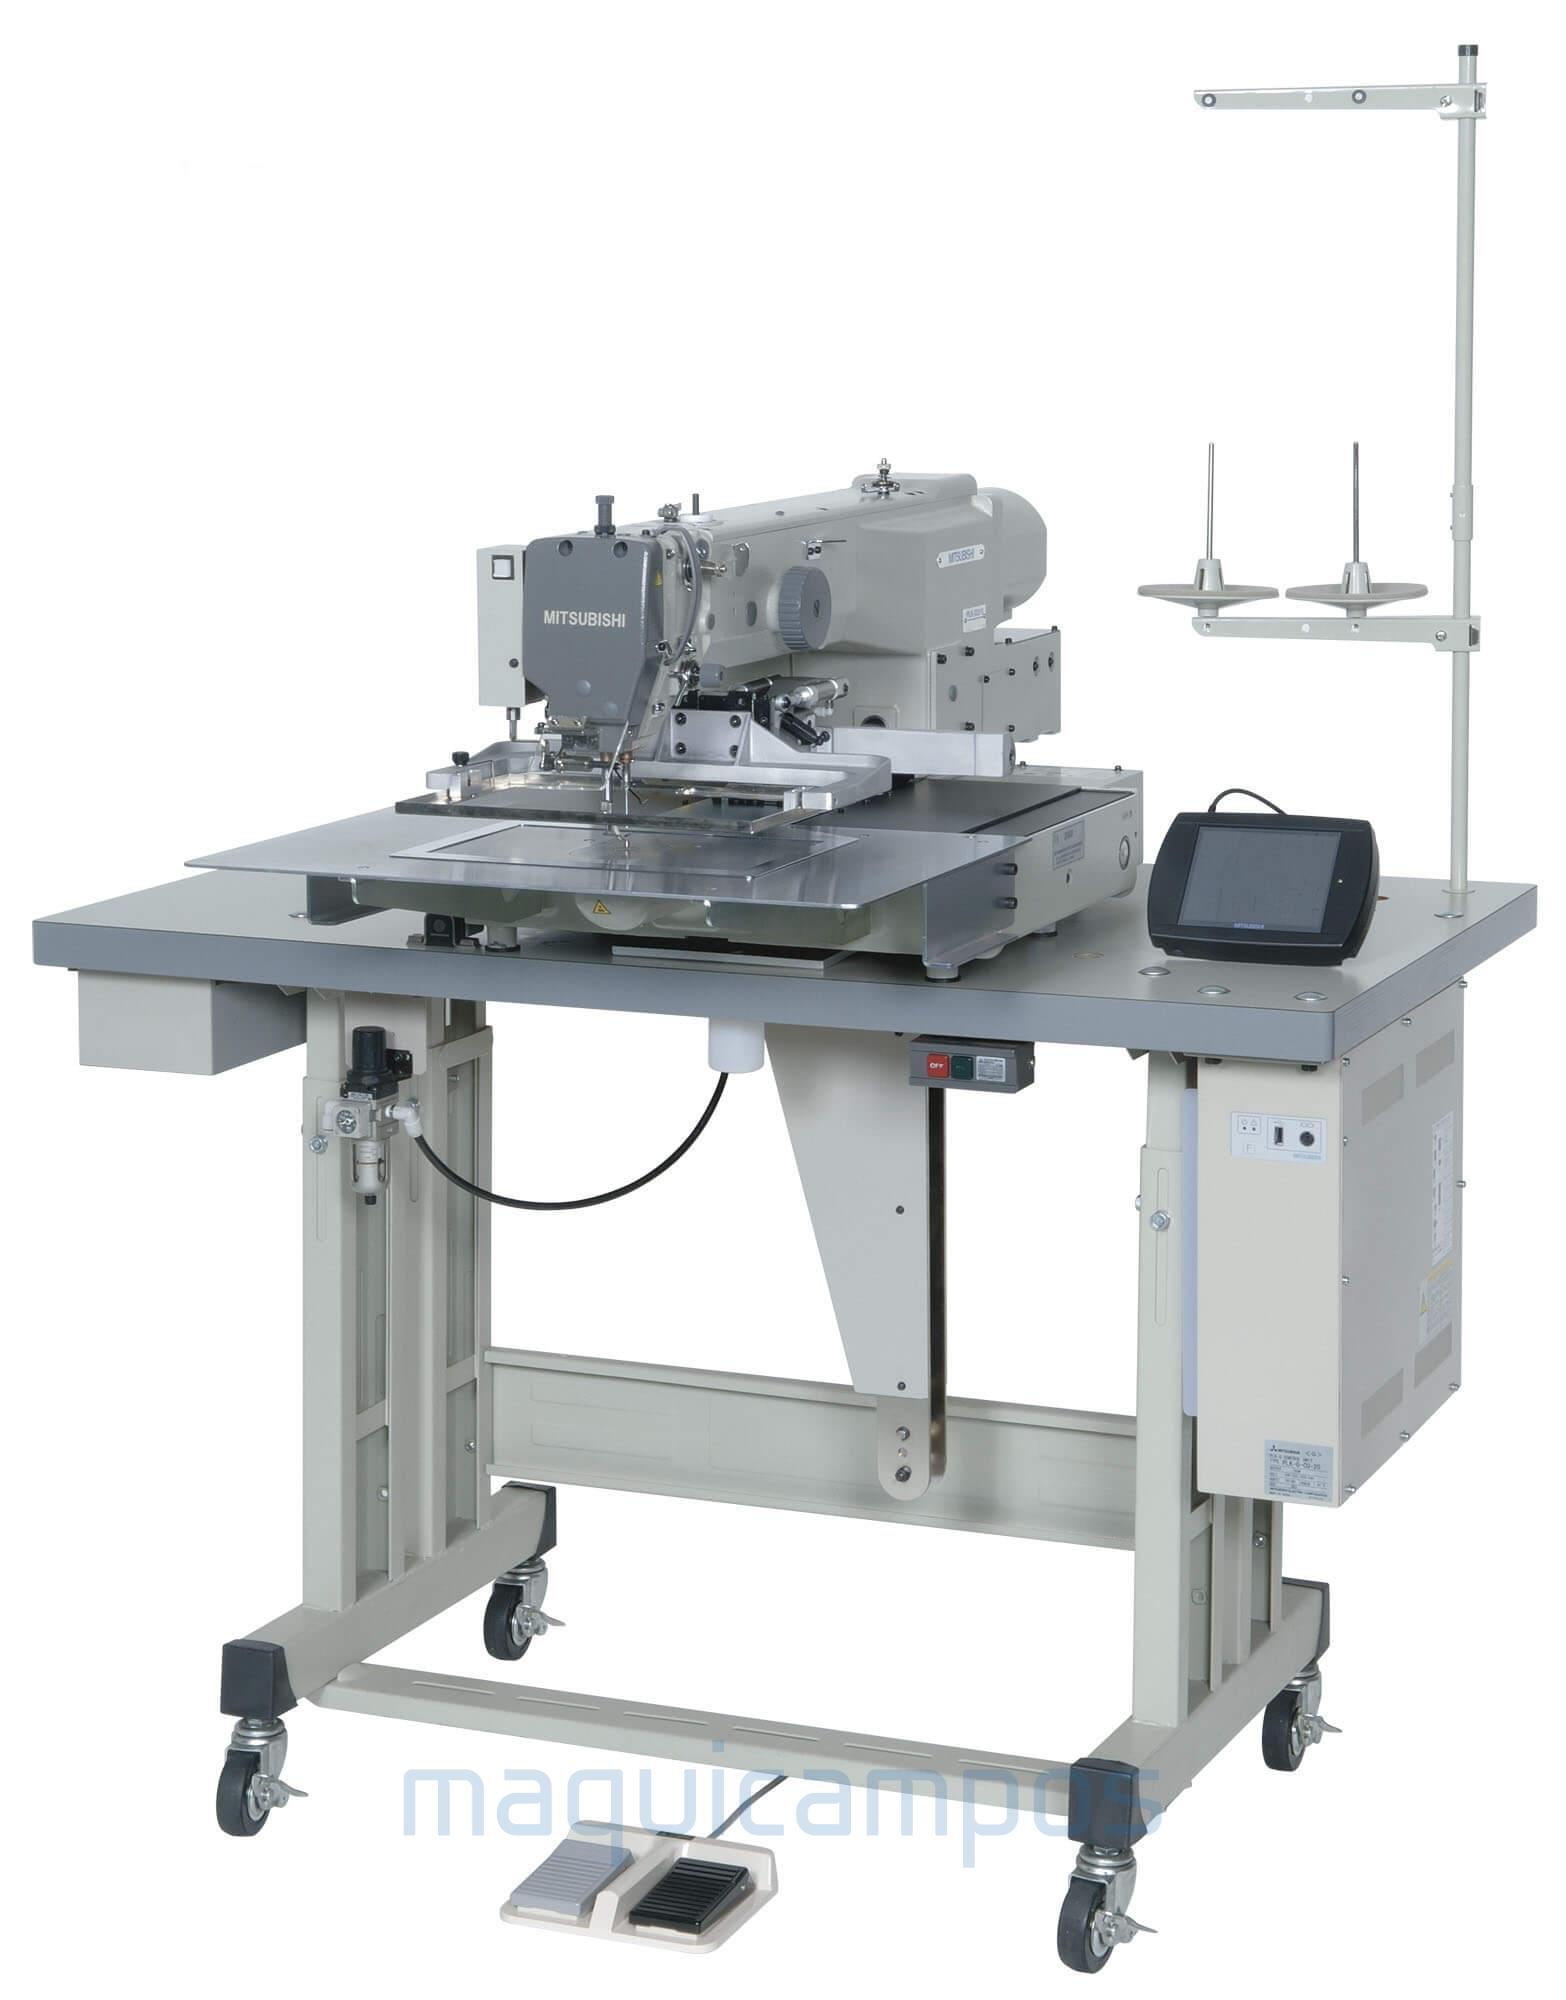 Mitsubishi PLK-G2516 Programmable Sewing Machine (250*160mm)